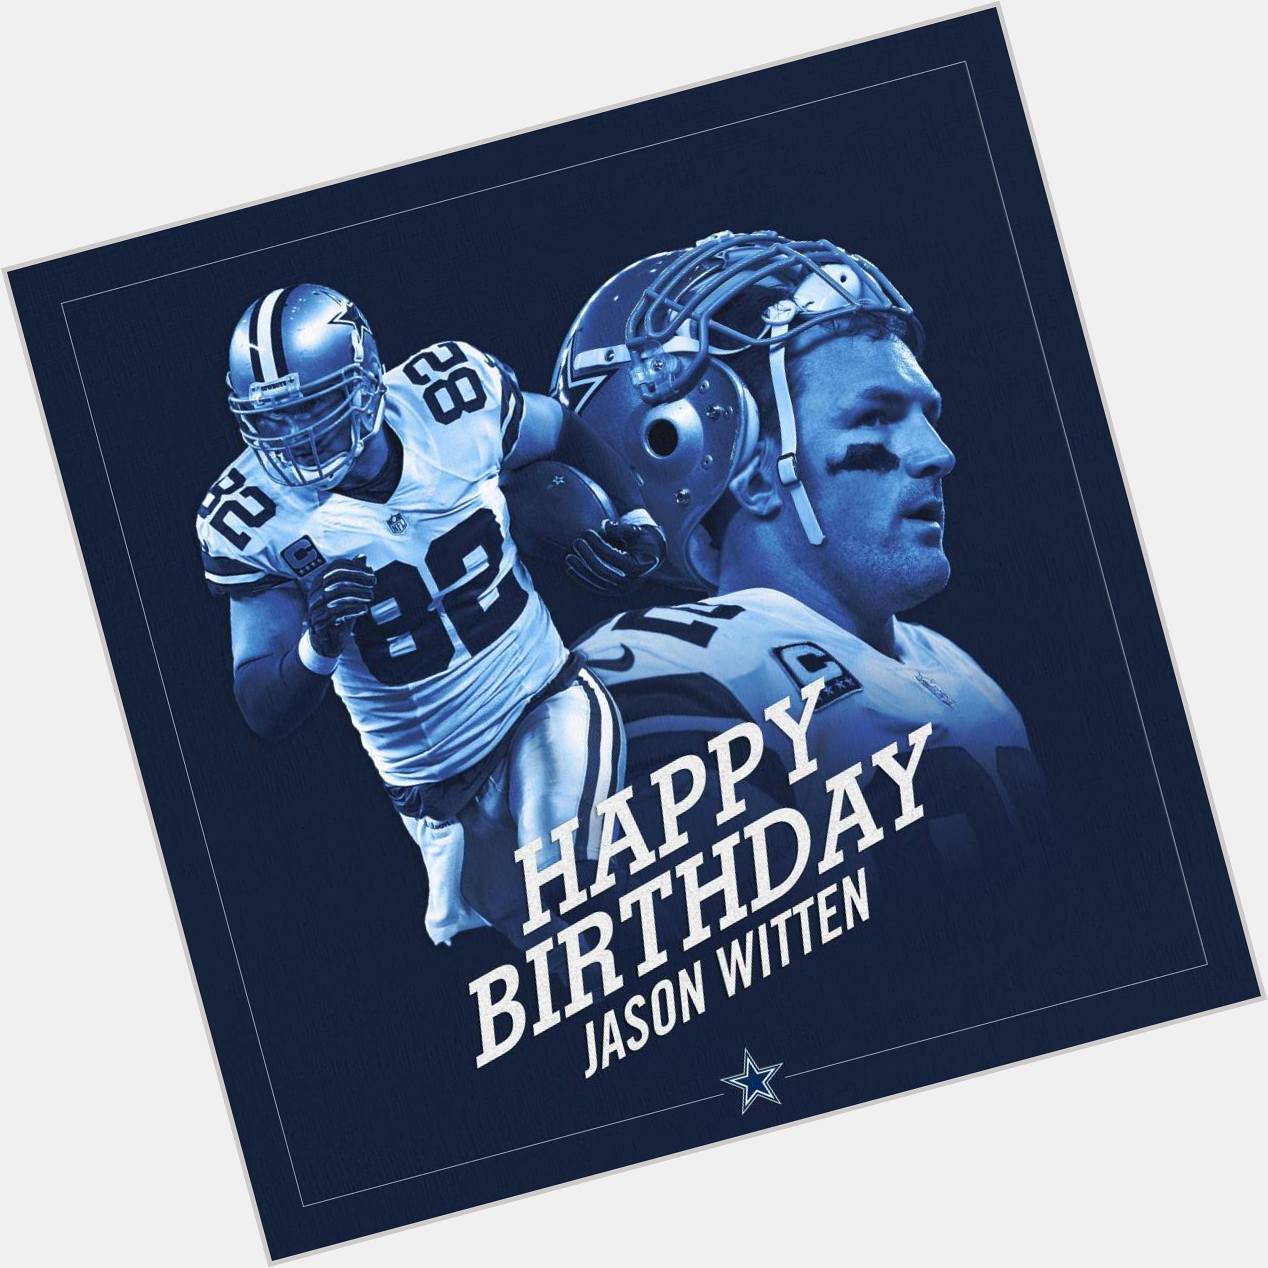  join us in wishing Jason Witten a happy birthday!  